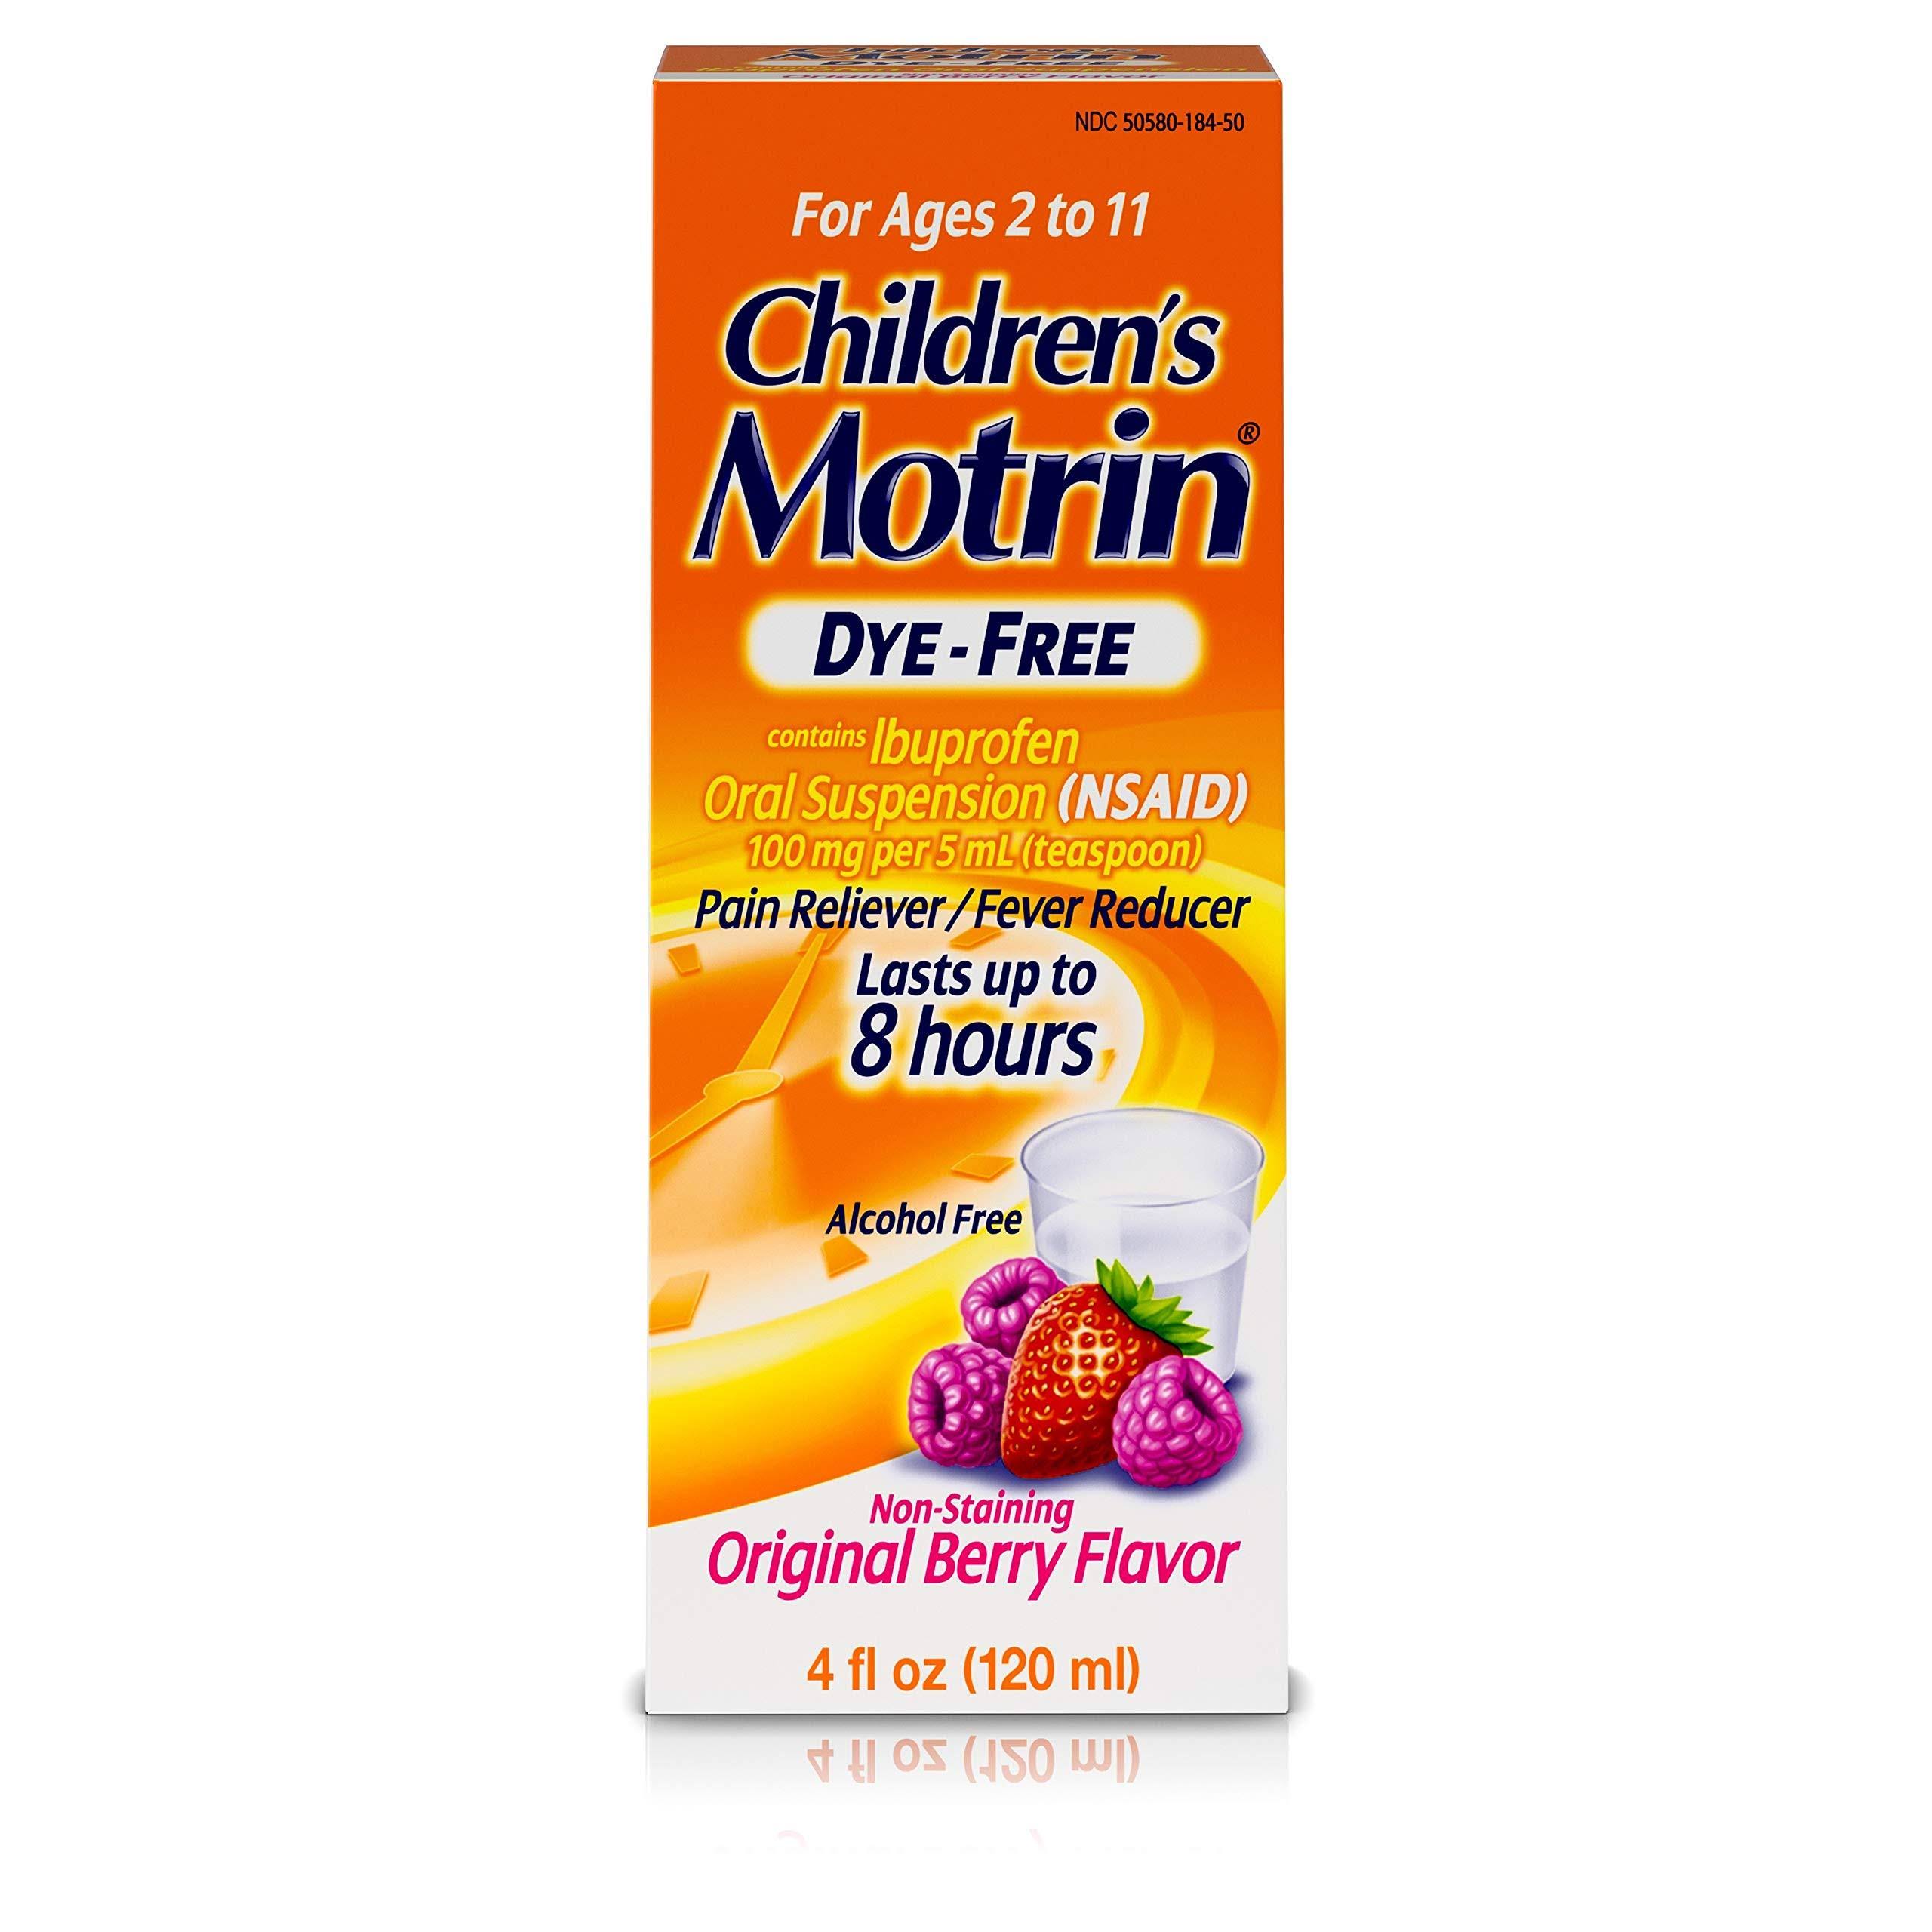 Motrin Children's Dye-Free Ibuprofen Oral Suspension - Original Berry, 4oz